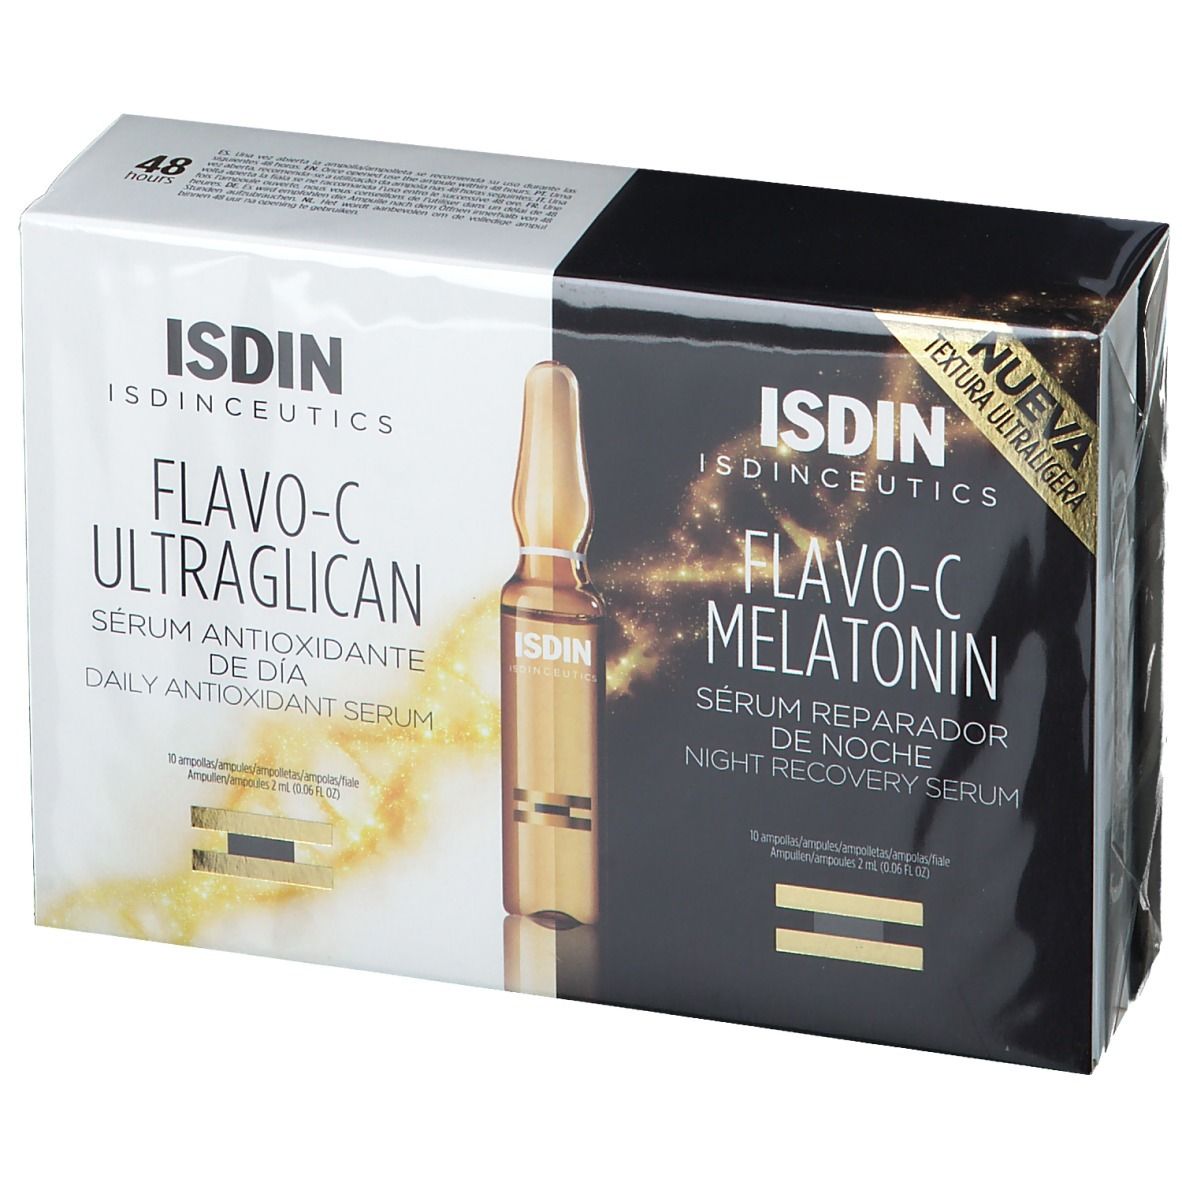 ISDIN Isdinceutics DUO Flavo-C Melatonin + Ultraglican